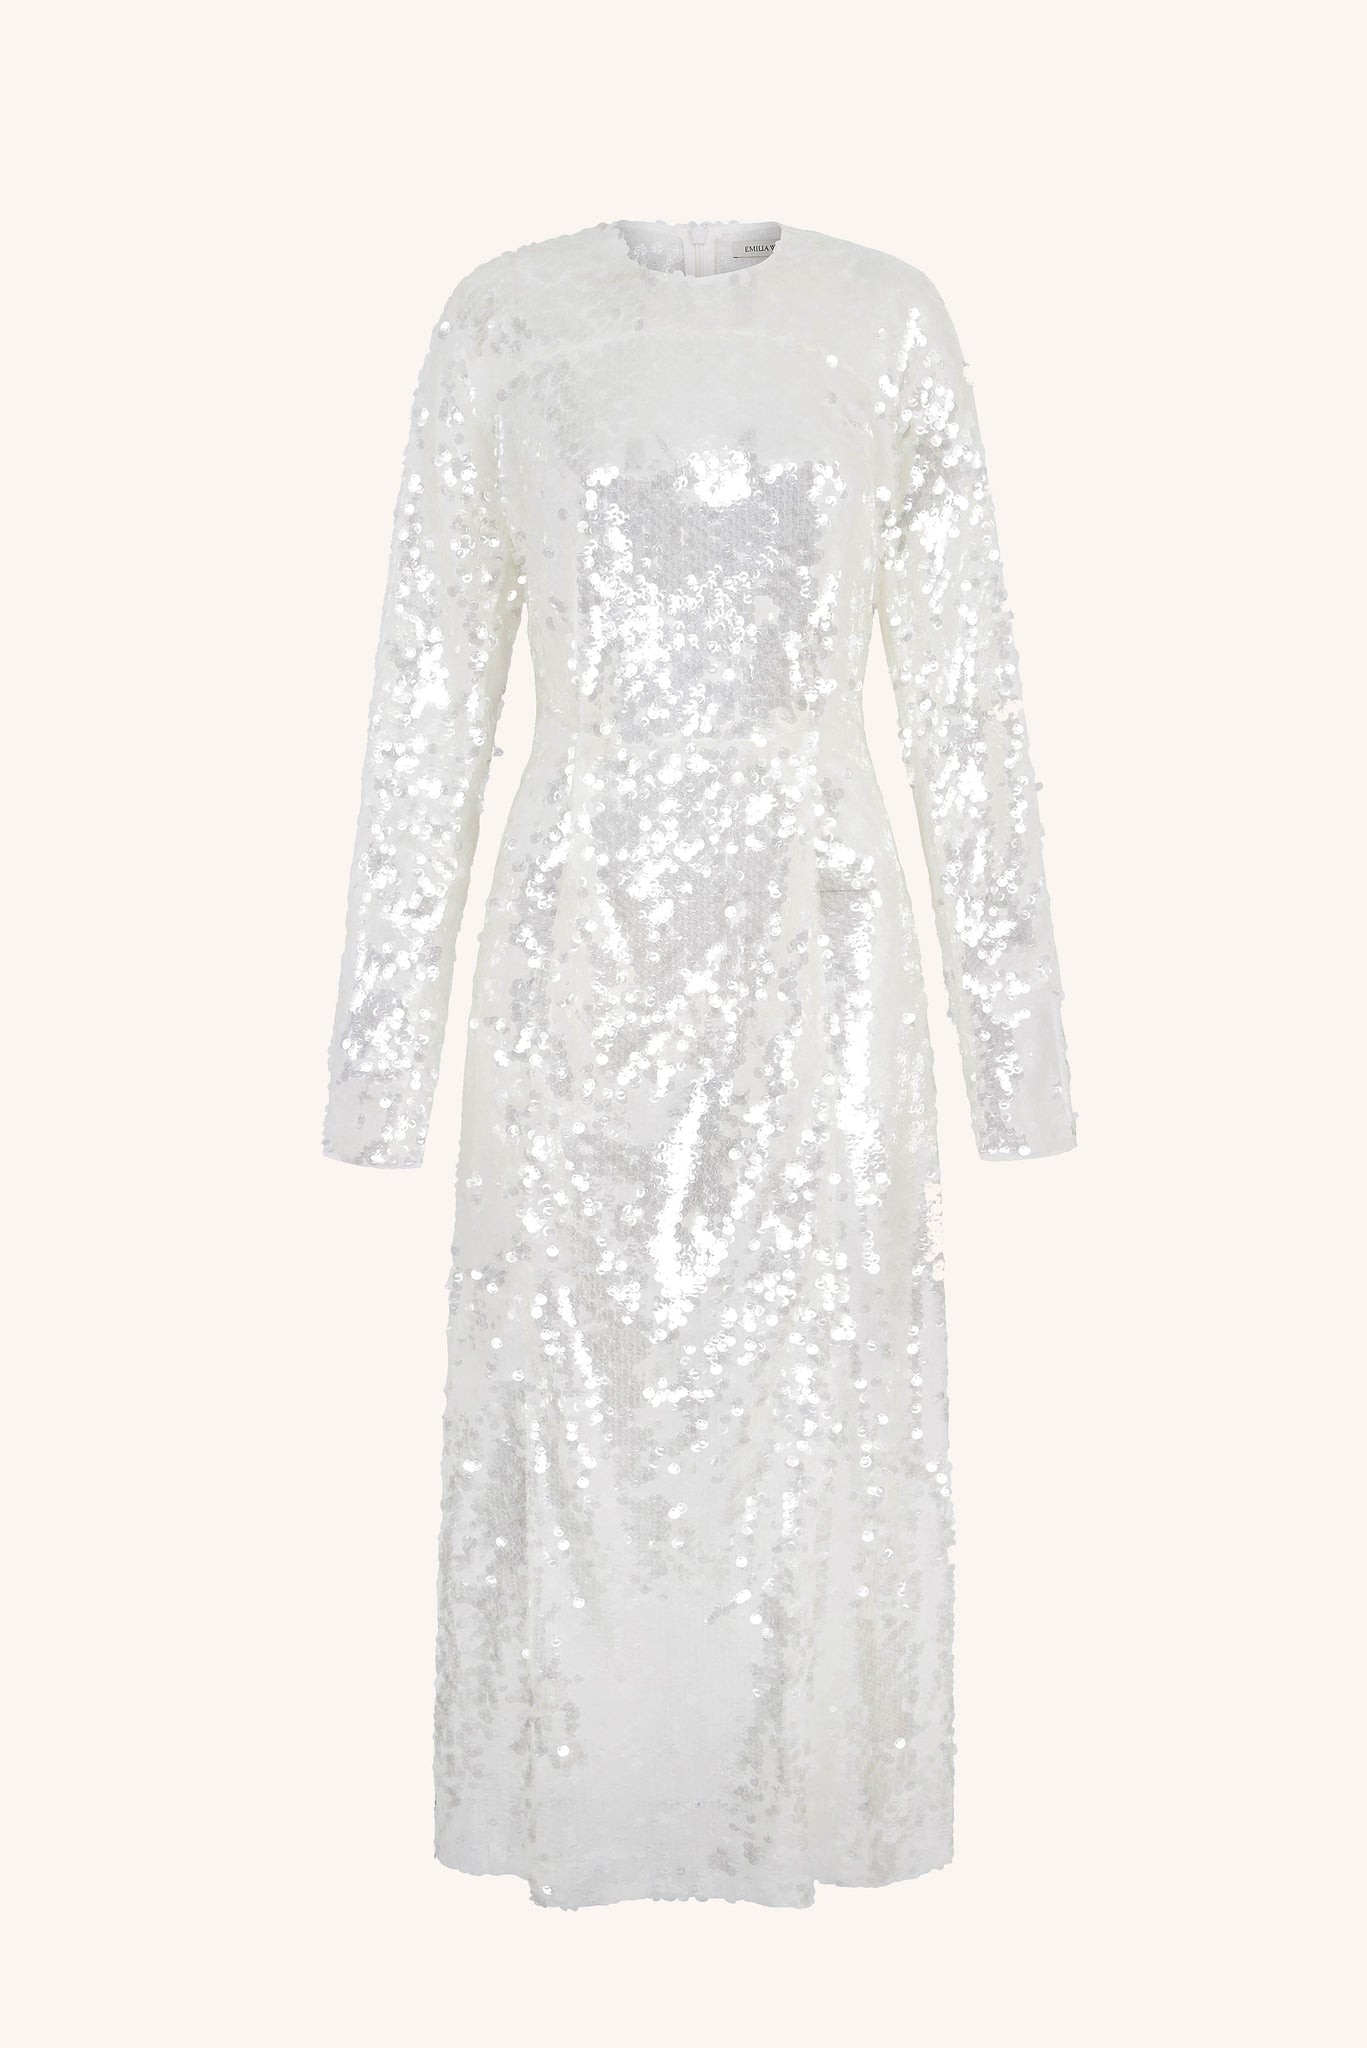 Amiria Clear Sequin Dress - Emilia WIckstead